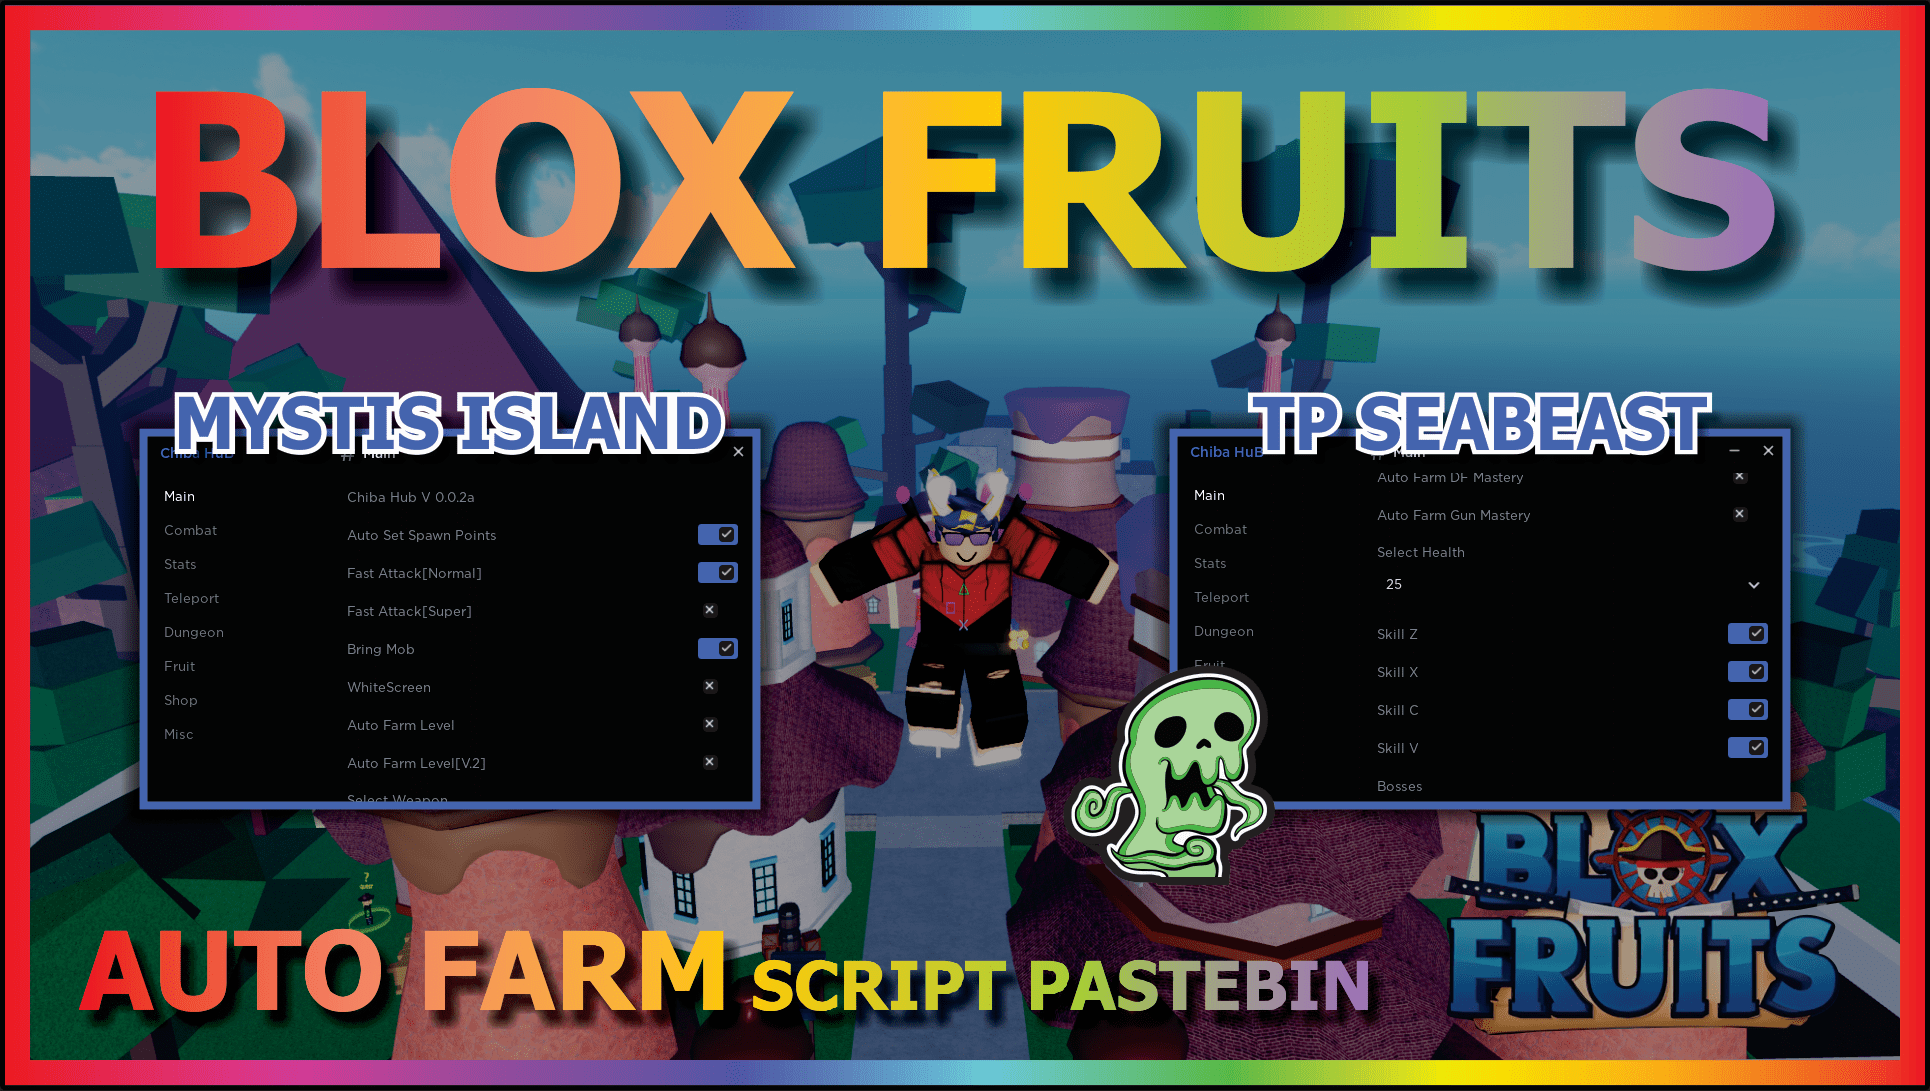 Blox Fruits: Fruit Mastery, Farm Gun Mastery, Auto Farm Lvl